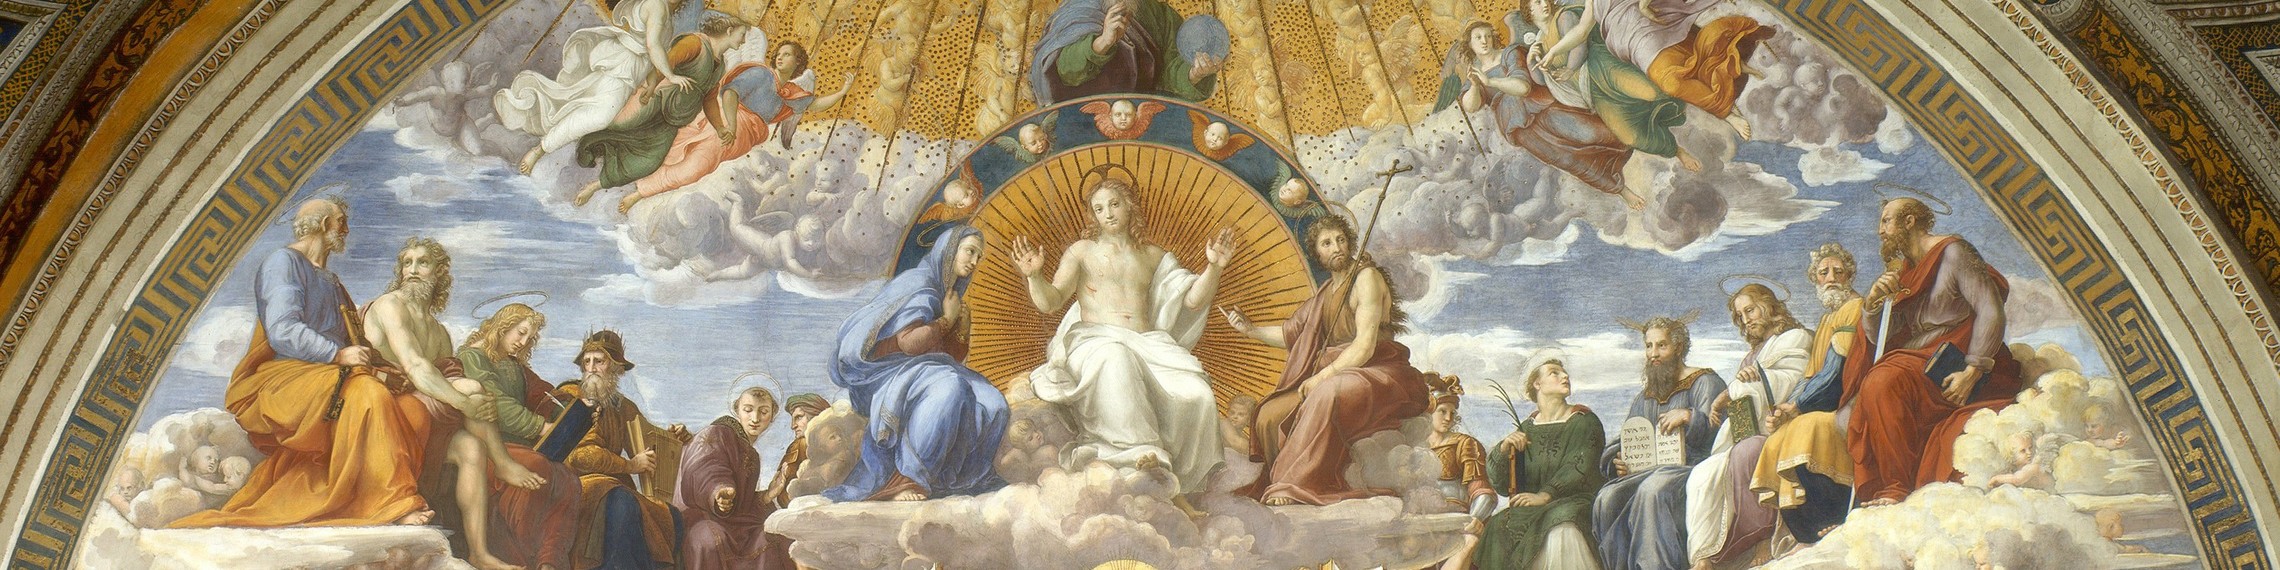 Image of Raphael's Disputation on the Holy Sacrament